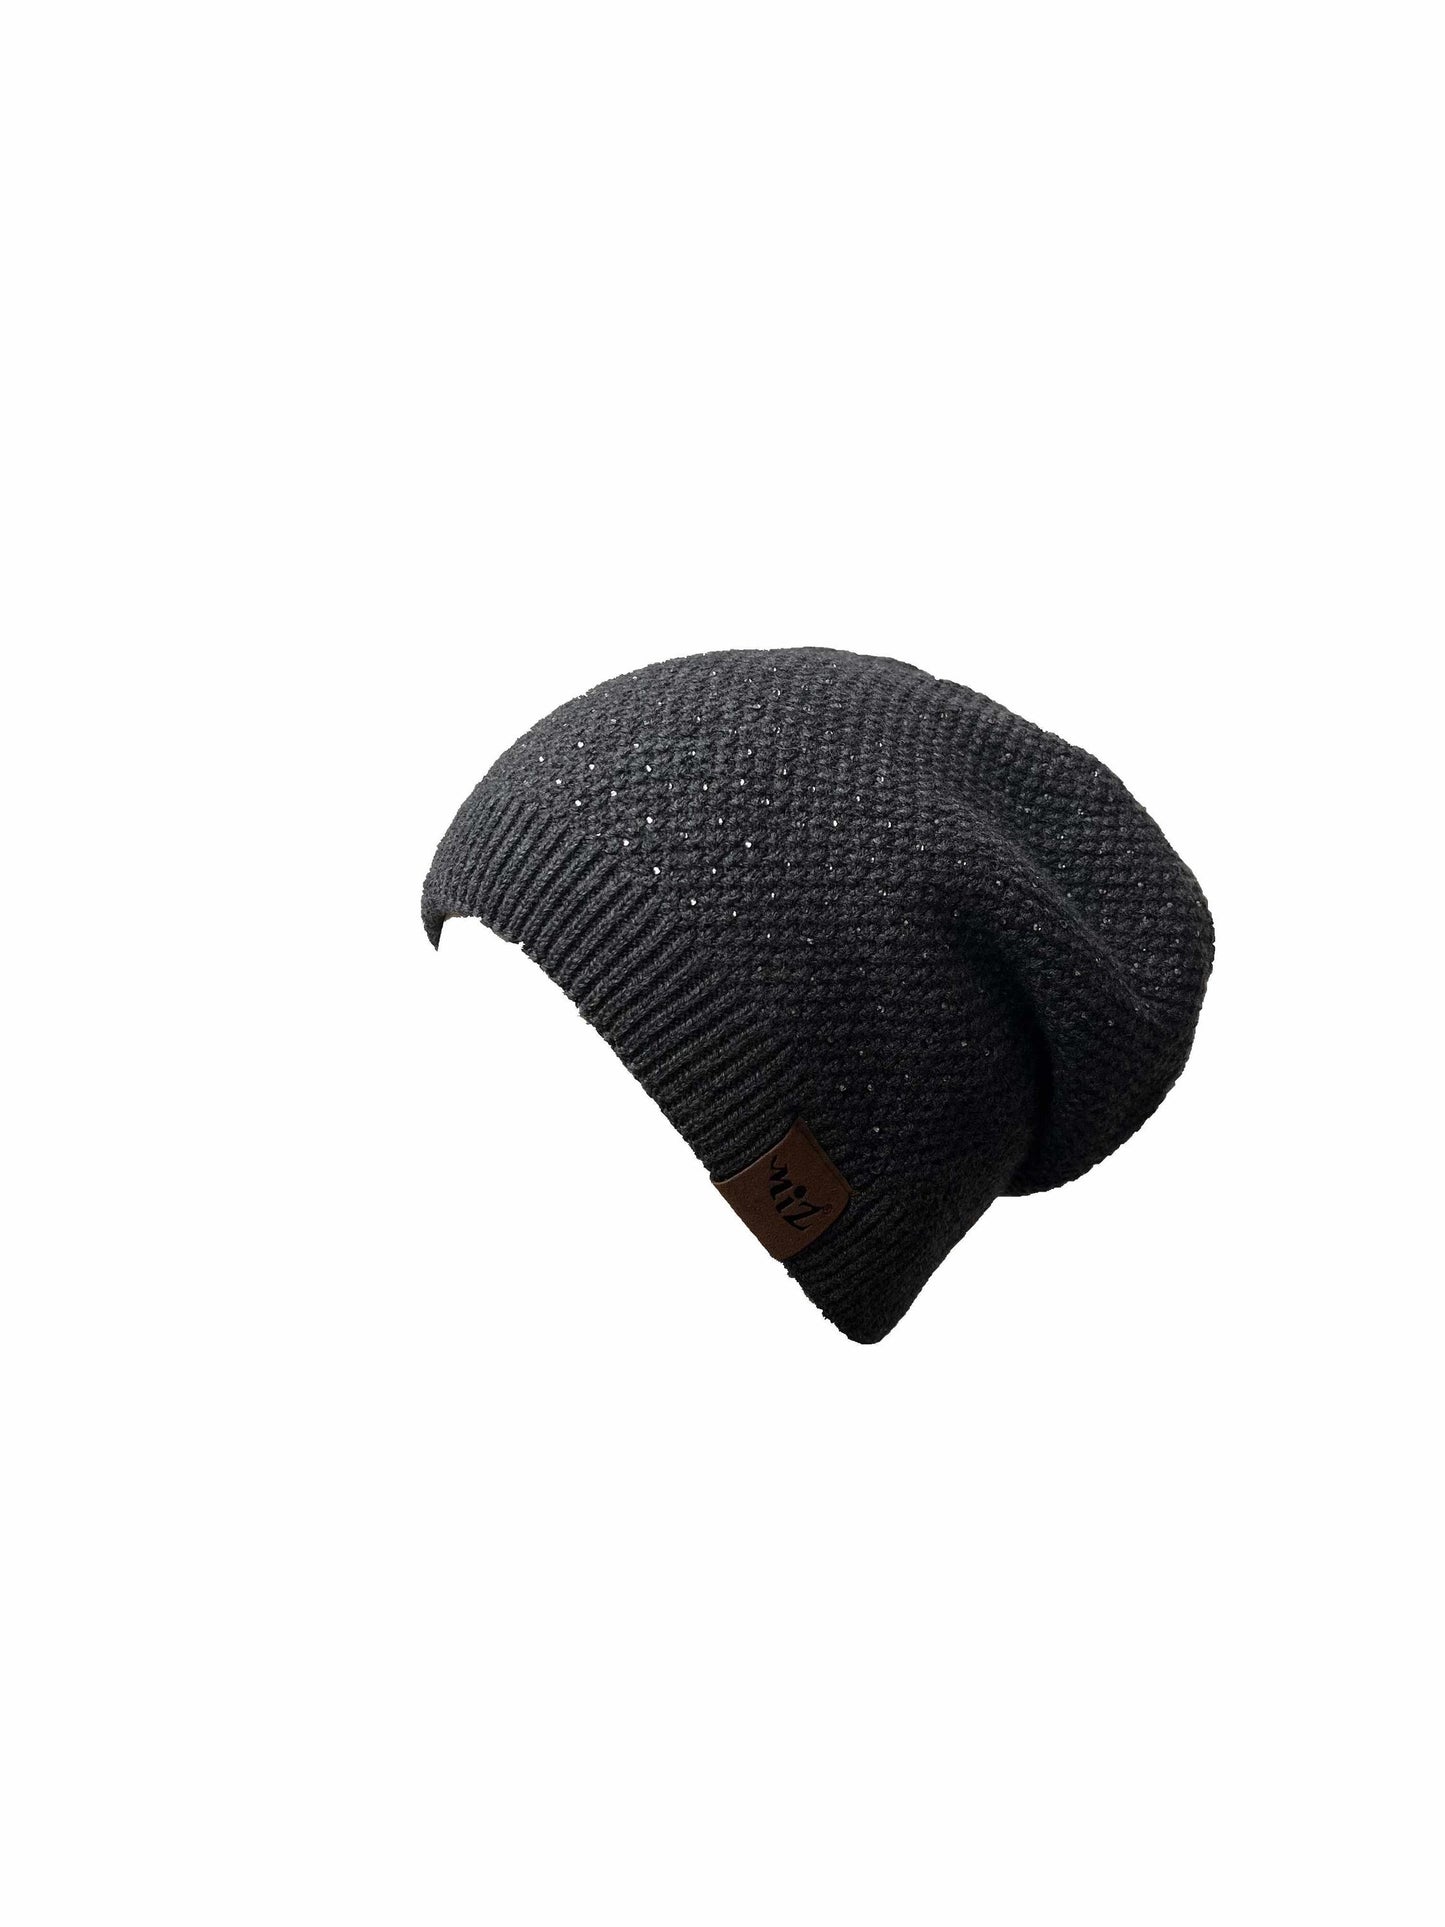 Warmest Winter Hat Mens, Wool Men's Winter Hats, woolen cap for men, black beanie hat mens, stylish winter hats for guys, cool winter hats for guys, Shop at Miz Collection